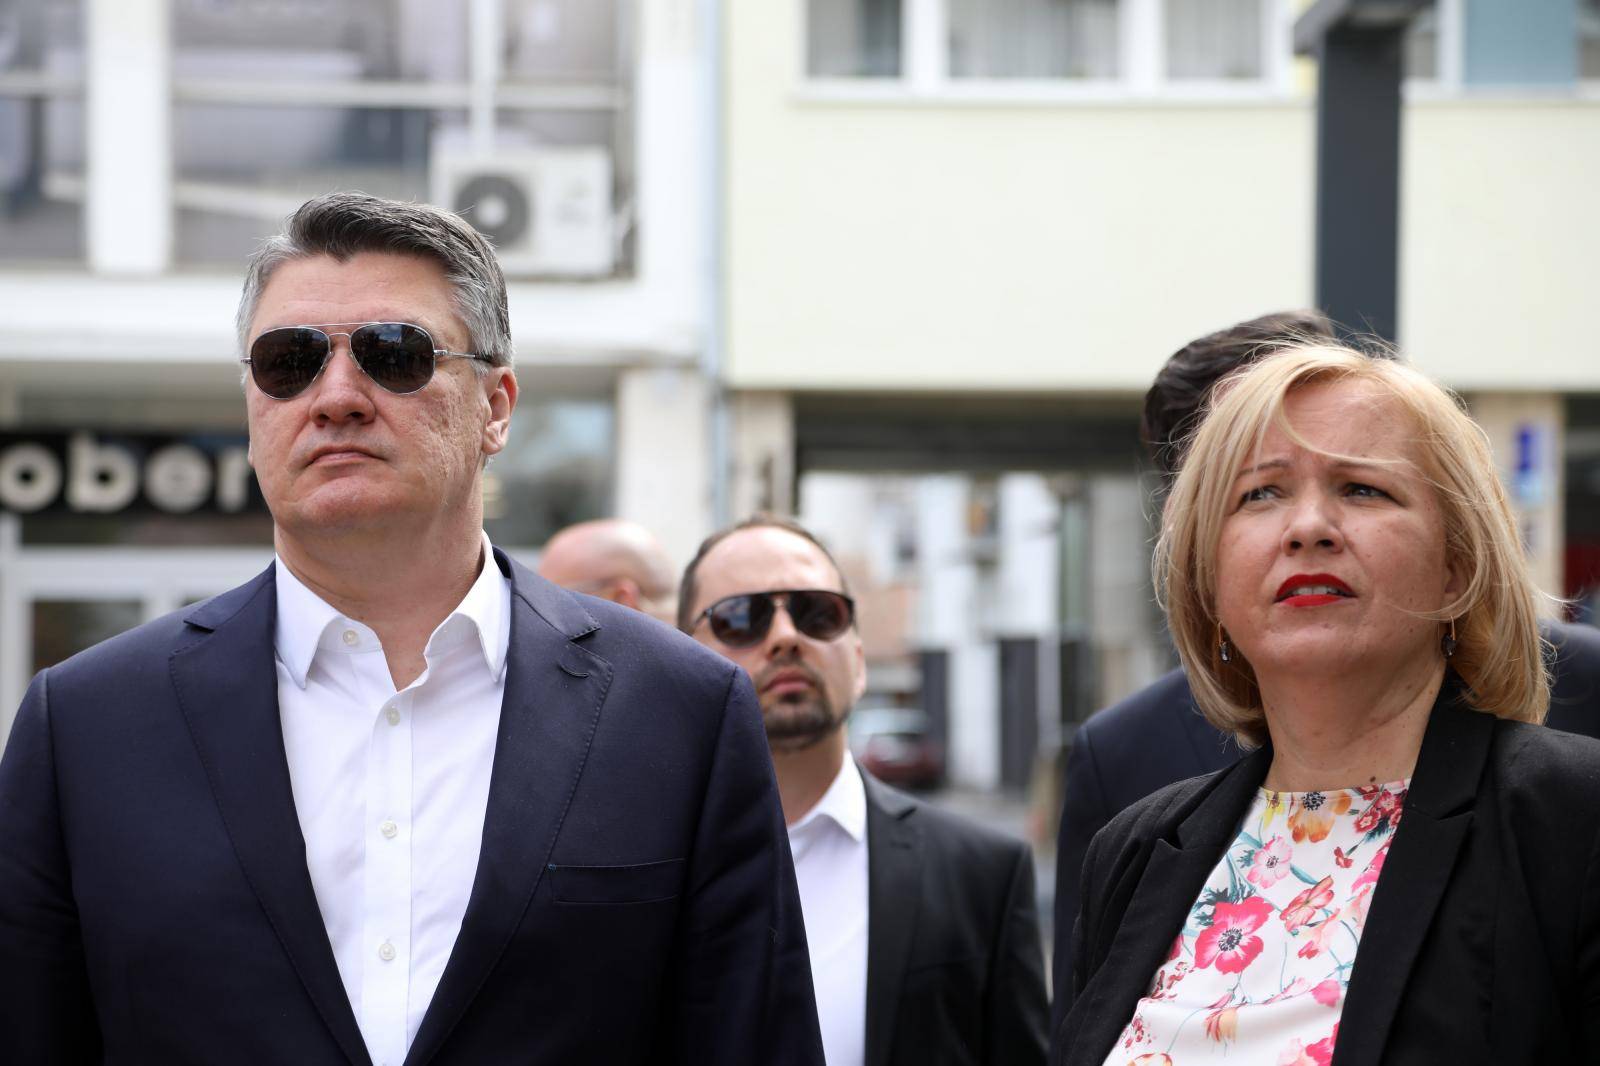 Predsjednik RH Zoran Milanović obišao je Sisak